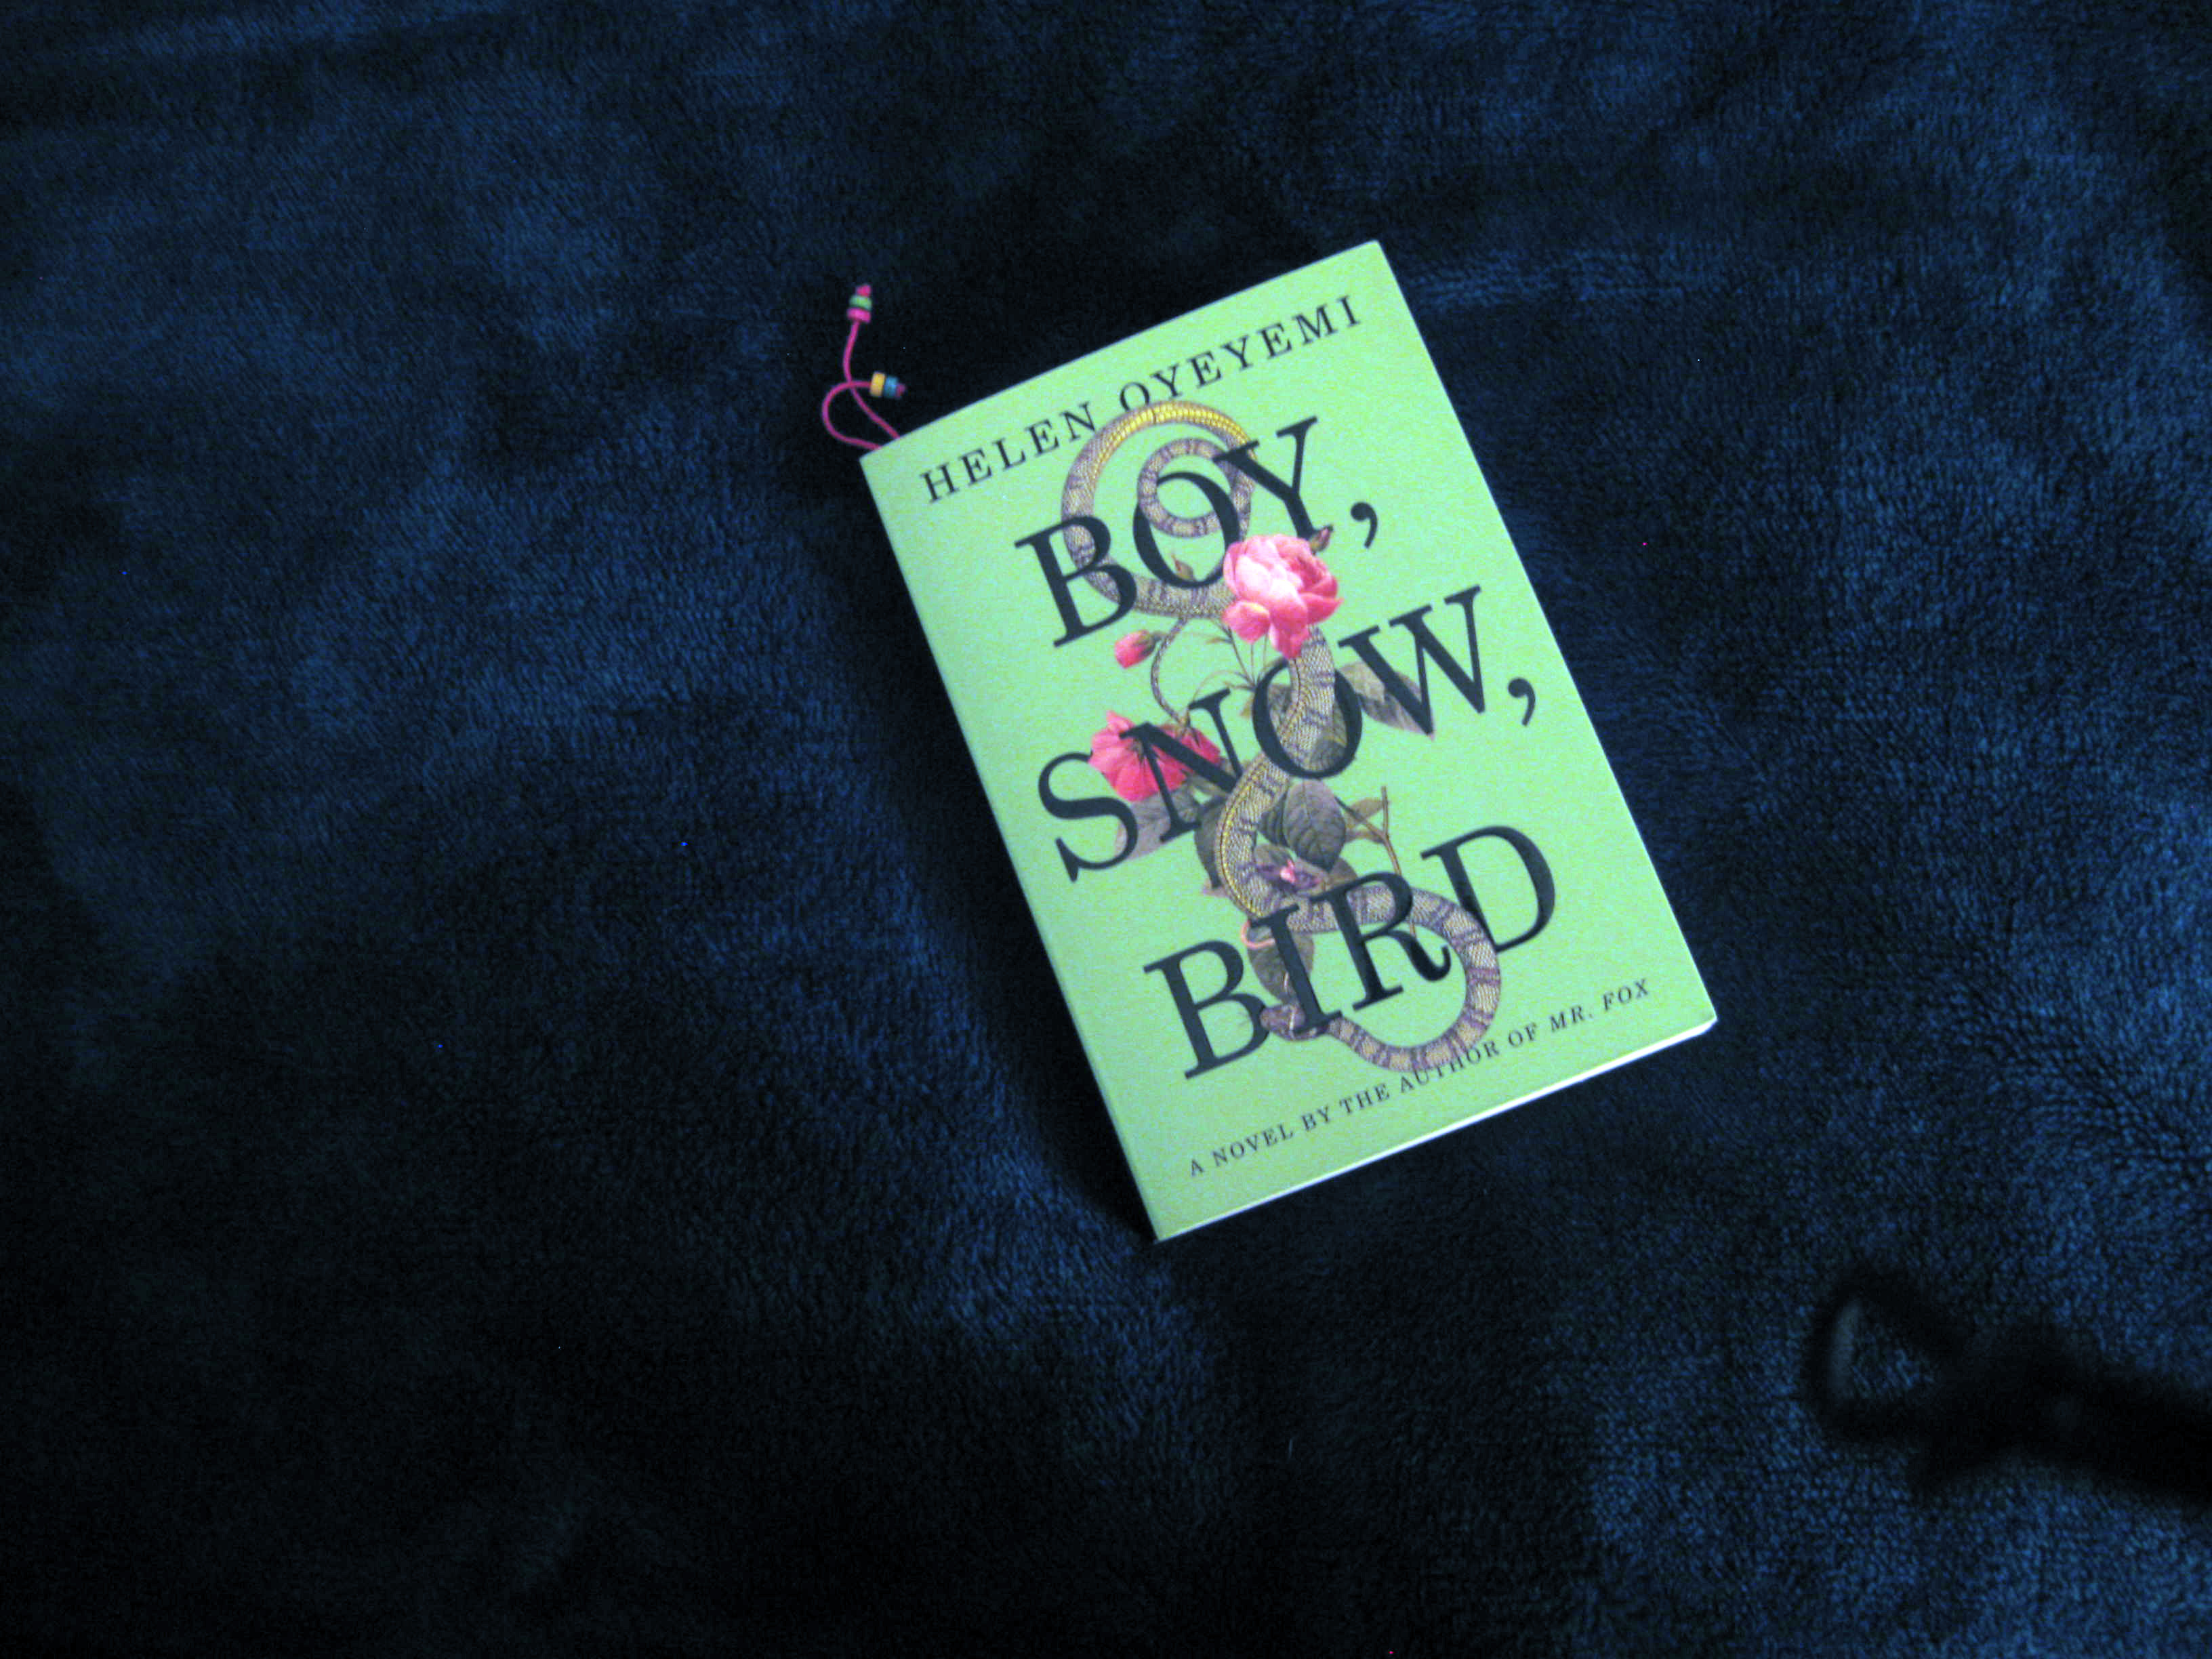 Boy, Snow, Bird by Helen Oyeyemi